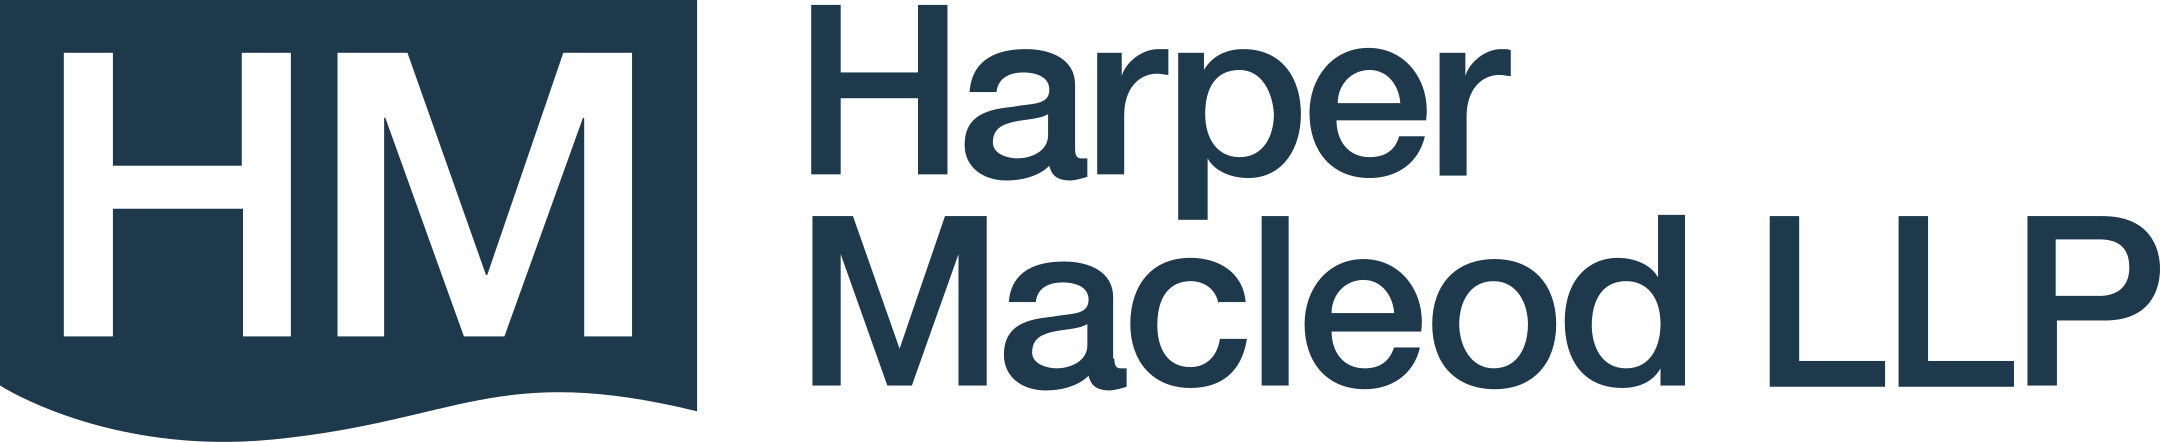 Harper Macleod LLP - Logo